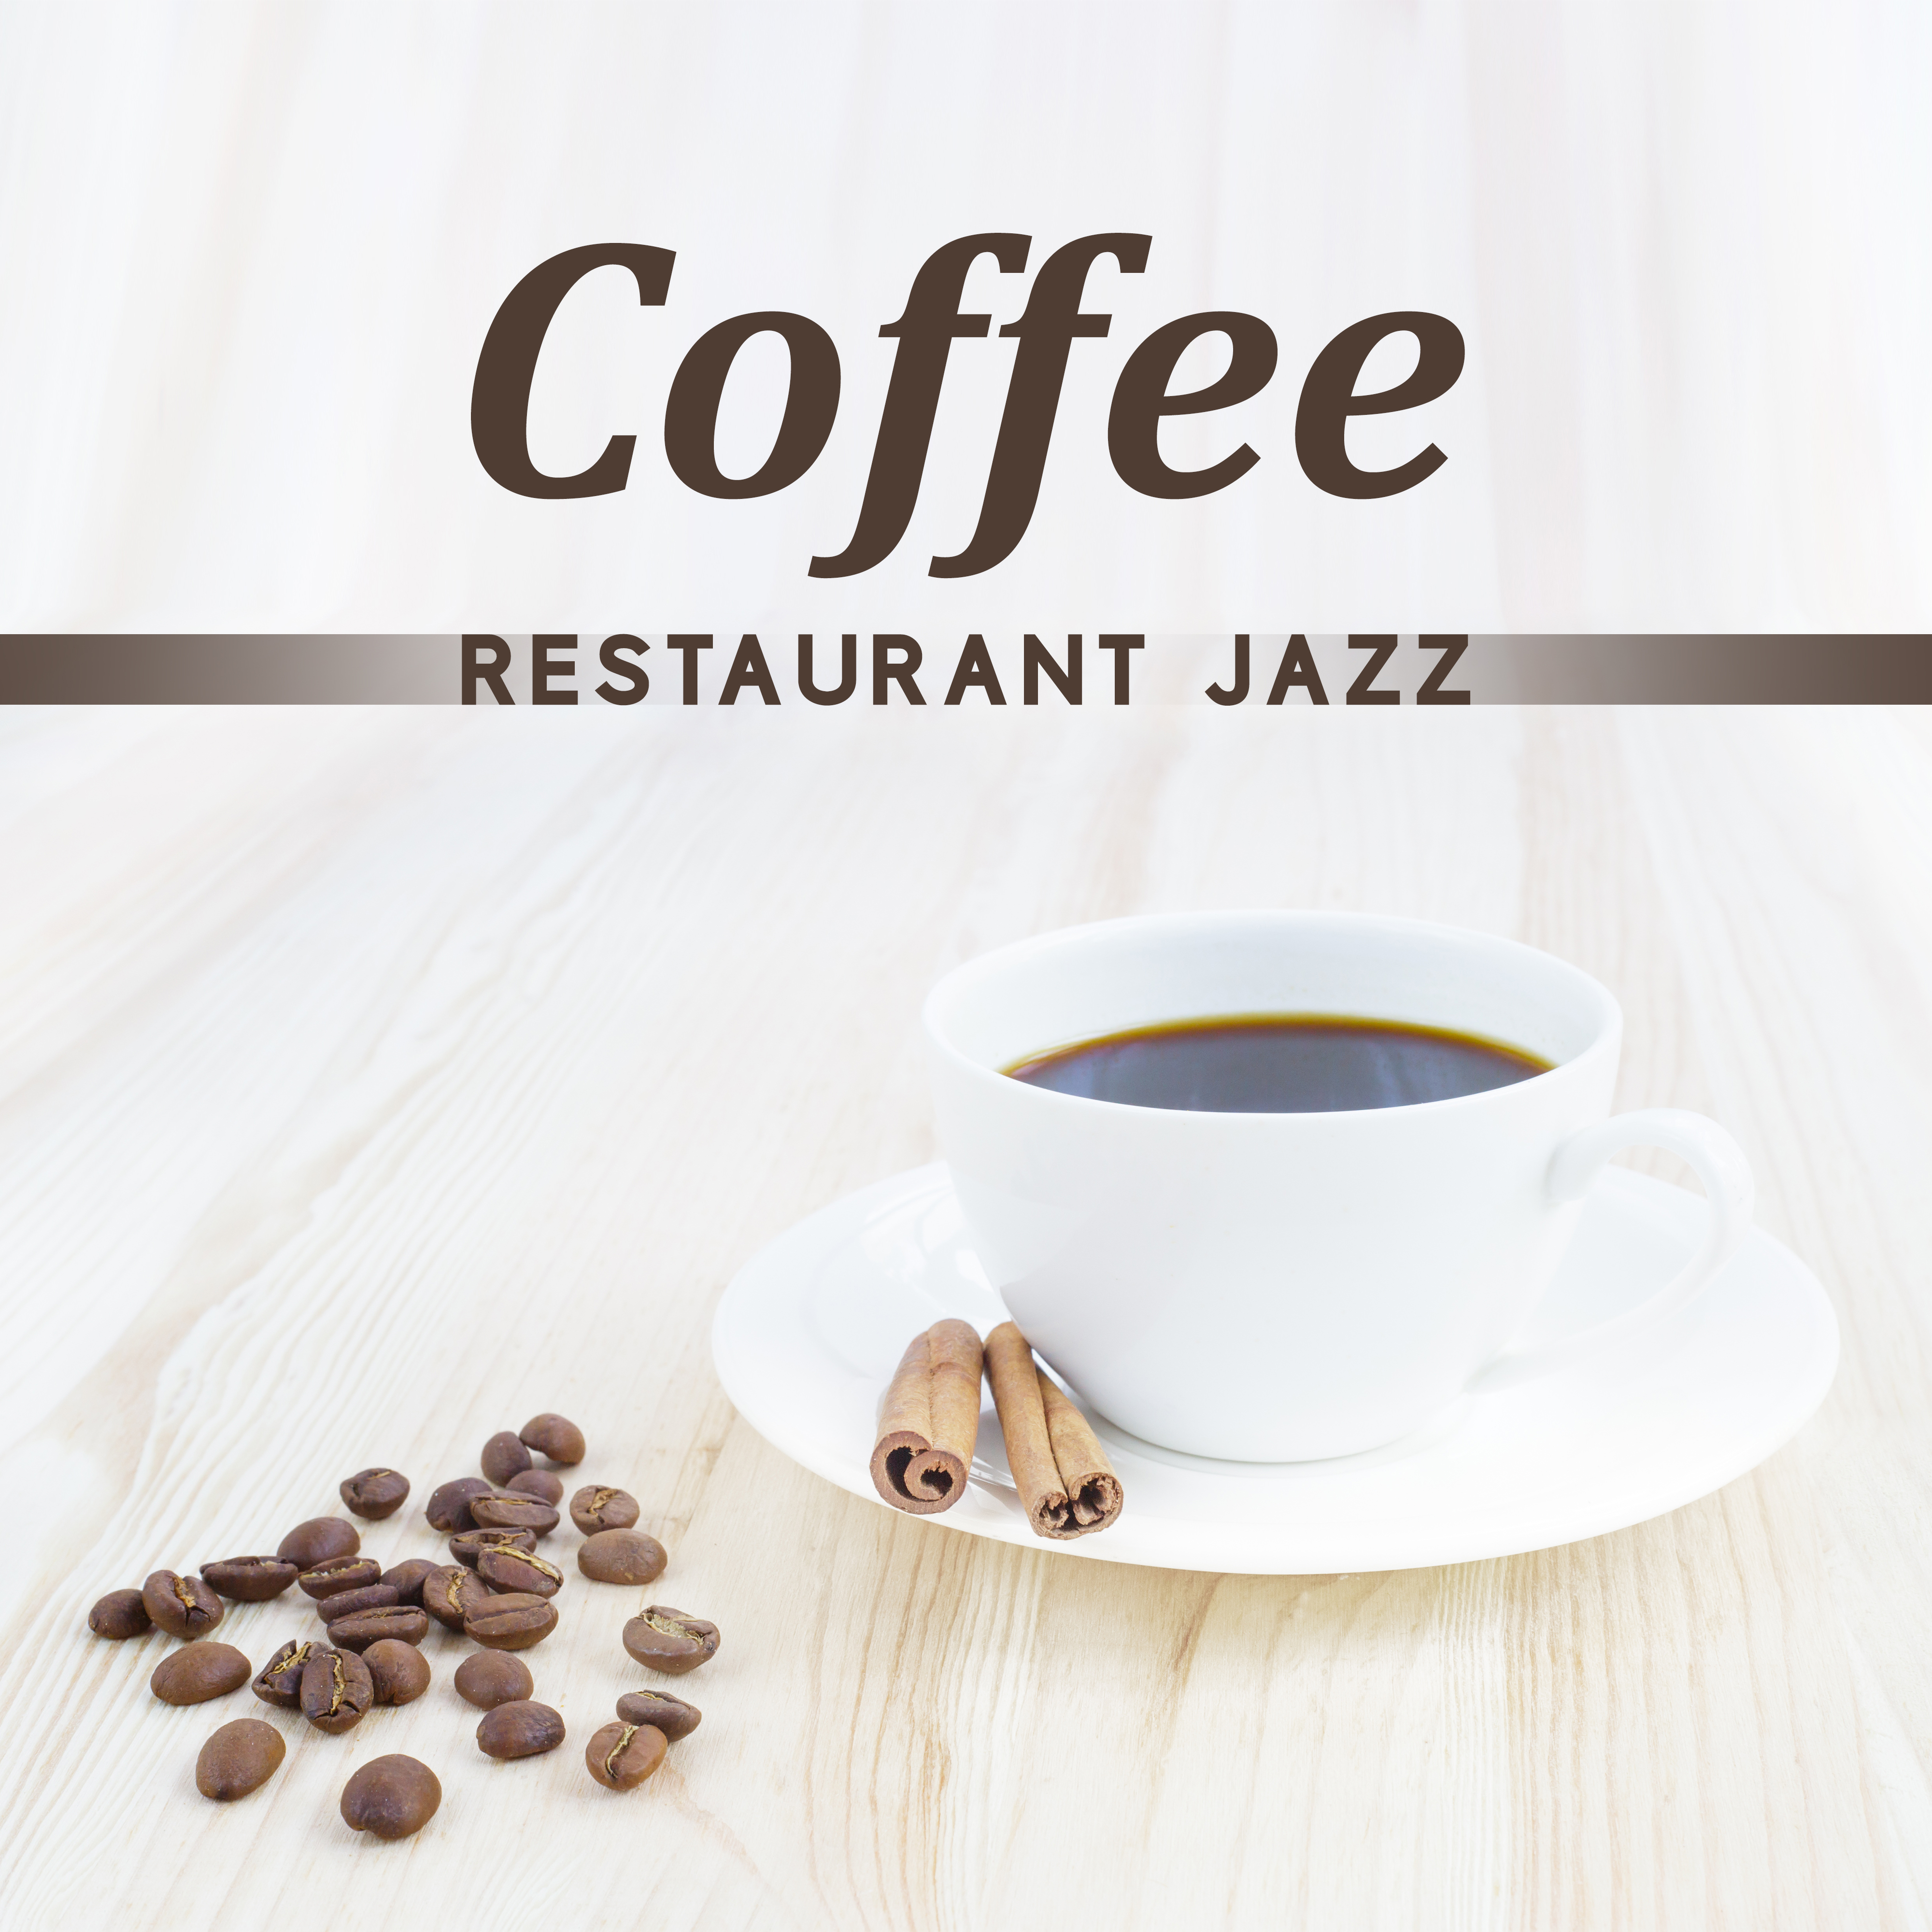 Coffee Restaurant Jazz